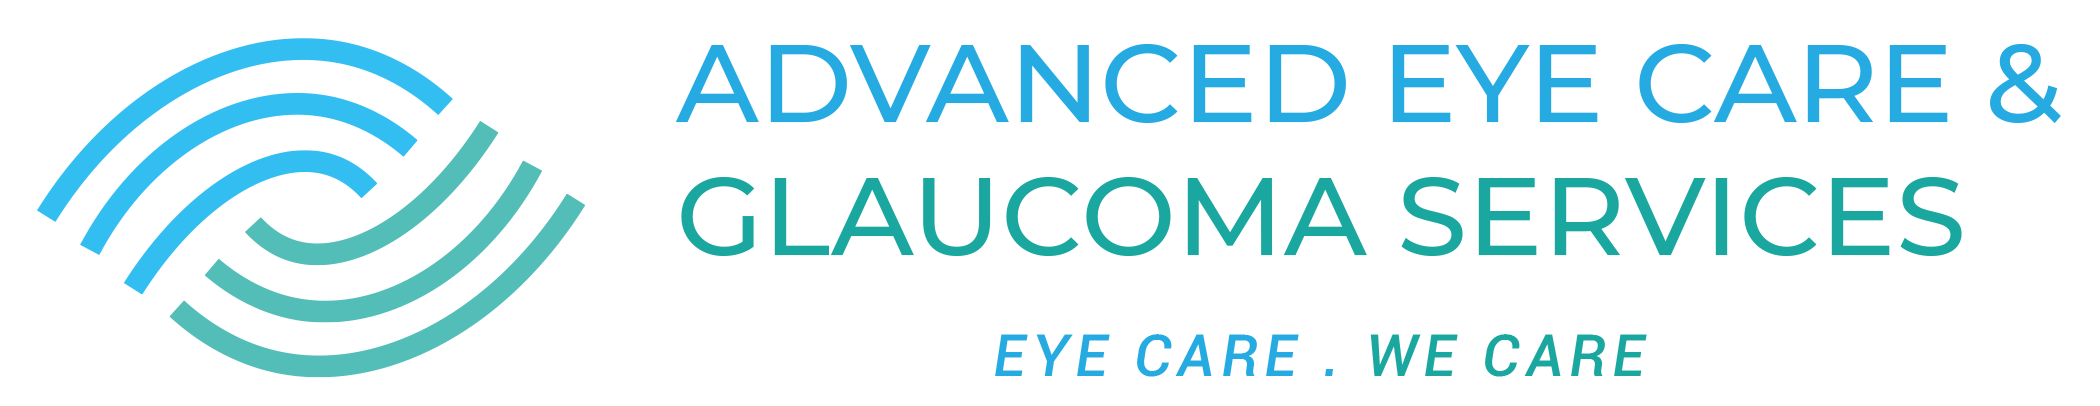 advanced eye care center